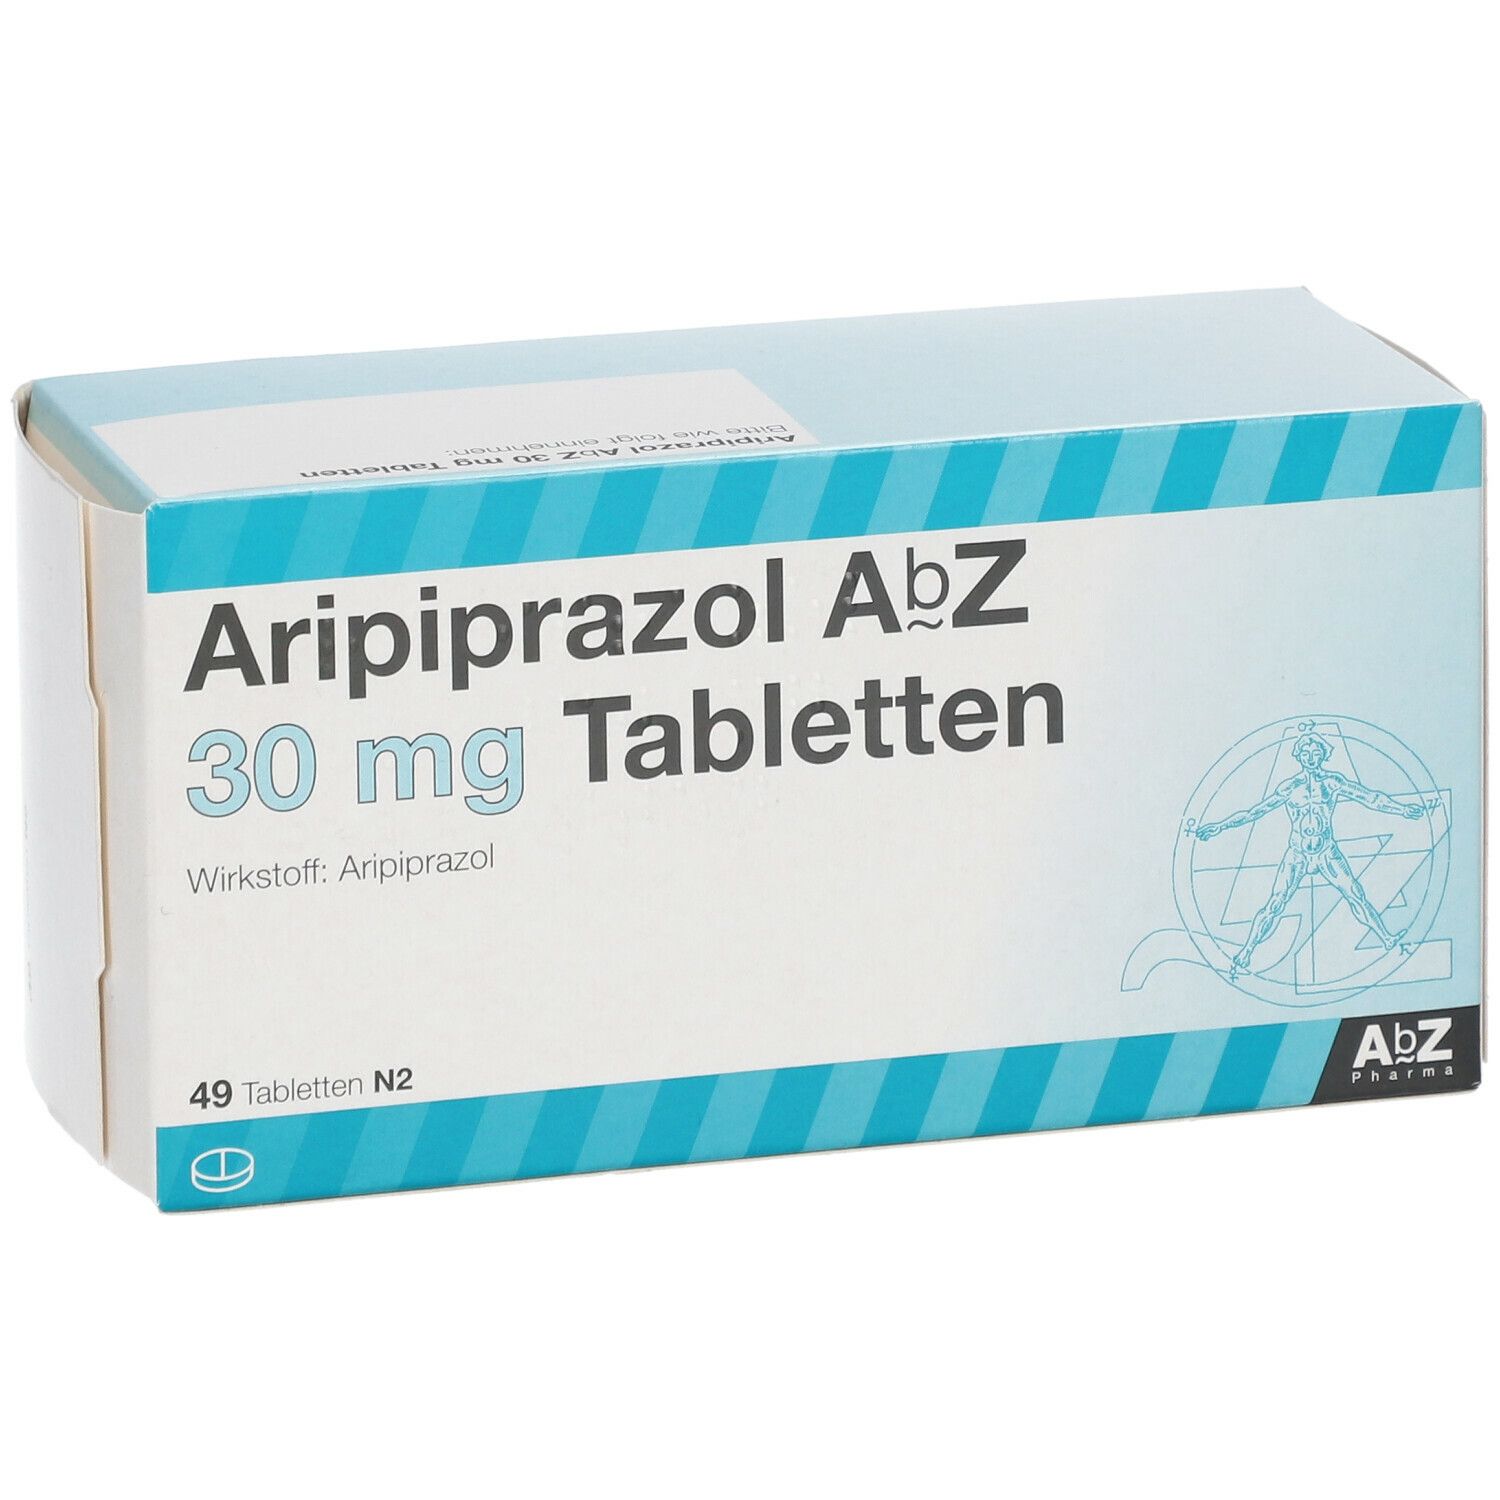 Aripiprazol AbZ 30 mg